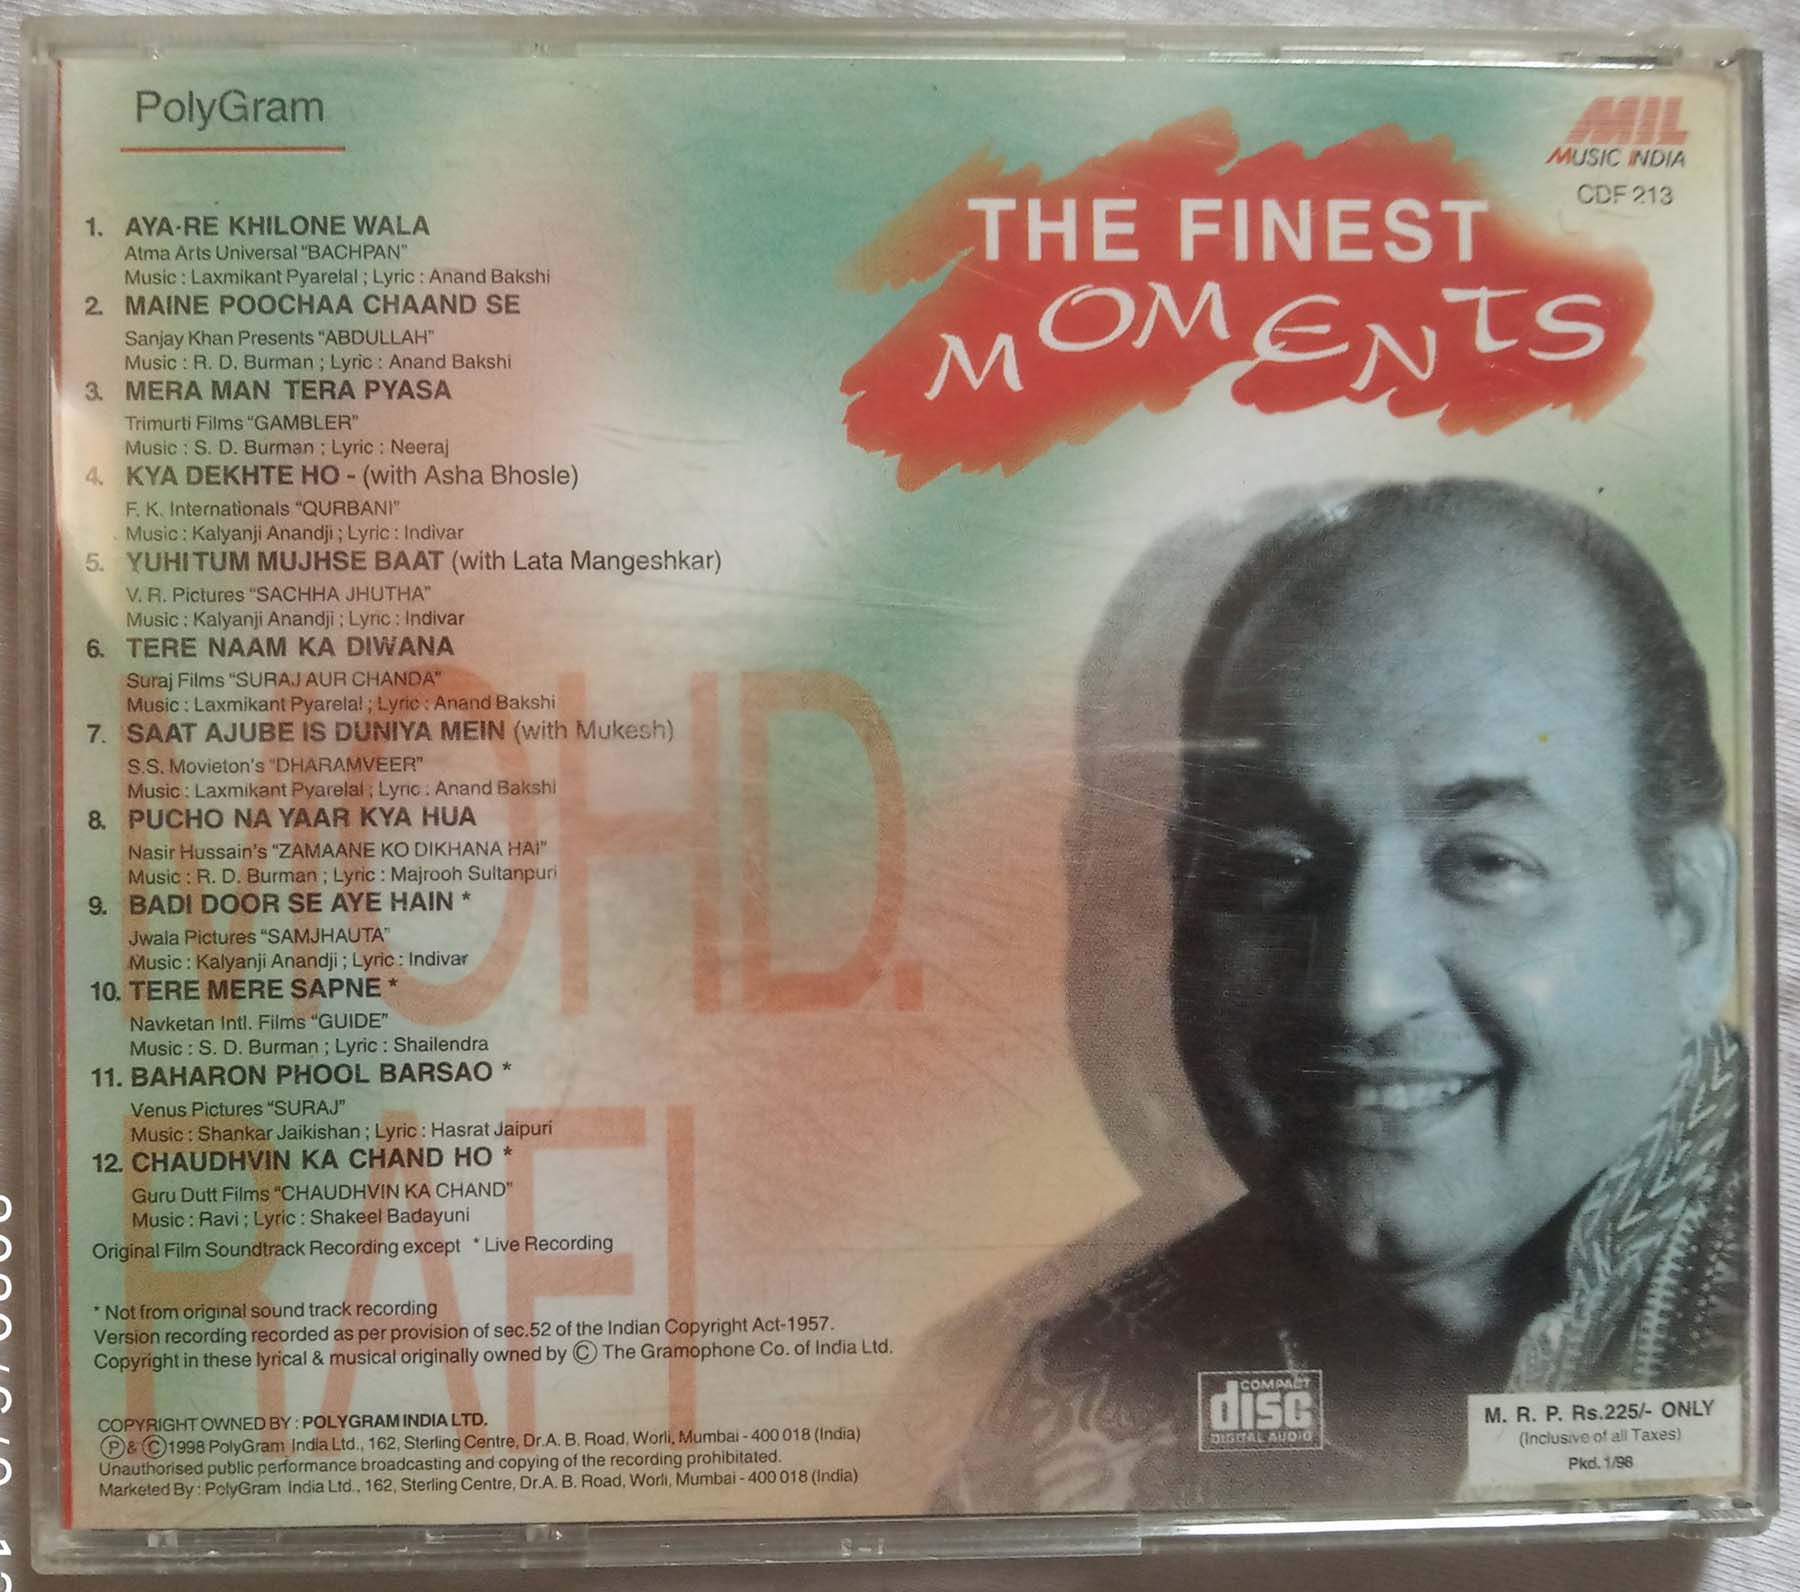 The Finest Moments Mohd. Rafi Hindi Audio CD banumass.com.